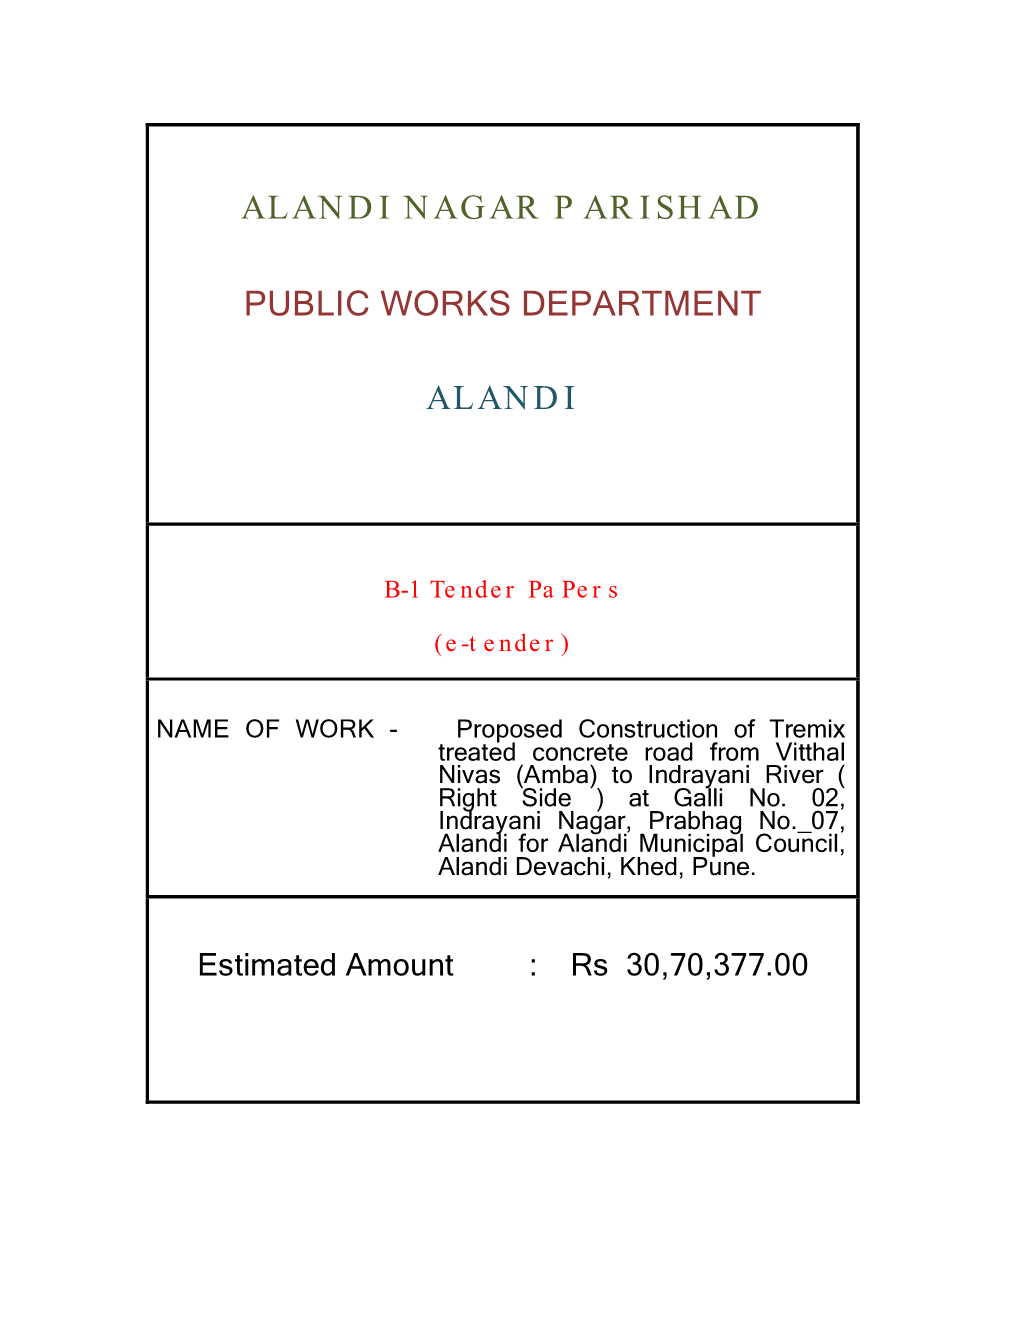 Alandi Nagar Parishad Public Works Department Alandi